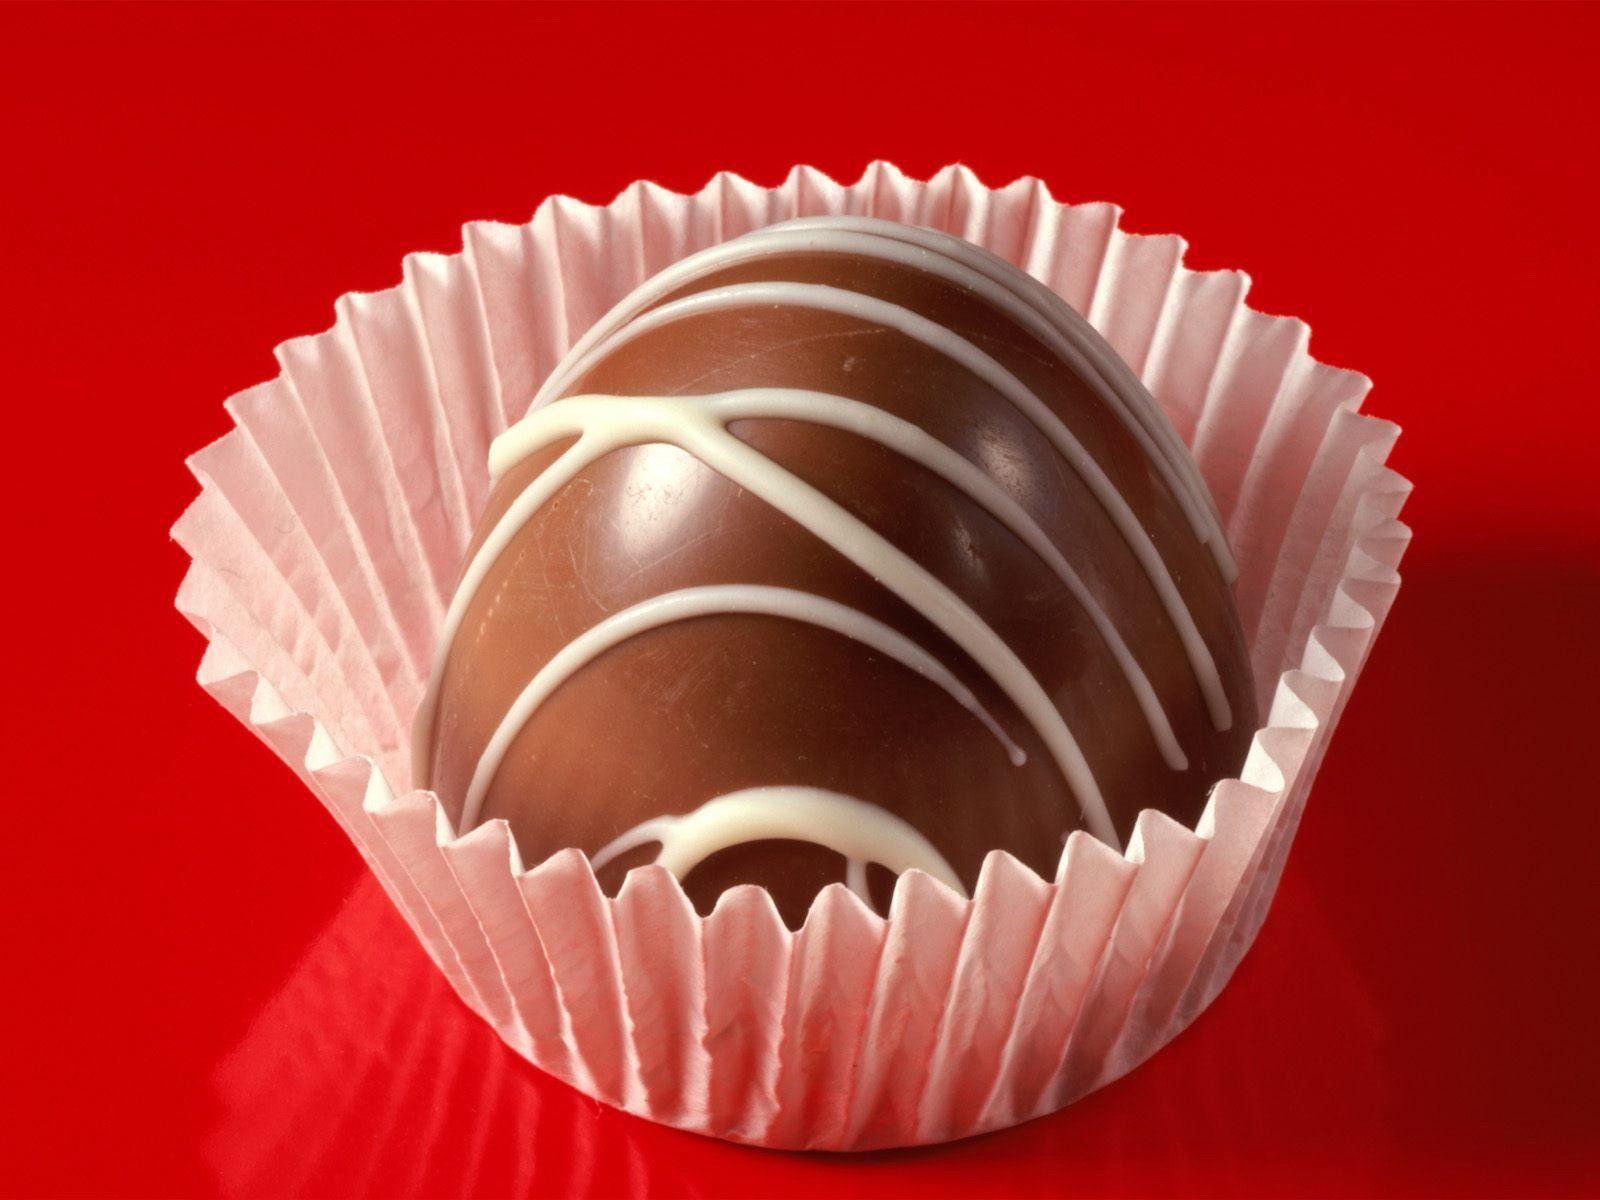 http://1.bp.blogspot.com/-LIwQoRgDFWE/UGK9U8WRAkI/AAAAAAAAAOM/yCoK64_N4fI/s1600/Chocolate-Candy-Wallpaper-chocolate-2317351-1600-1200.jpg